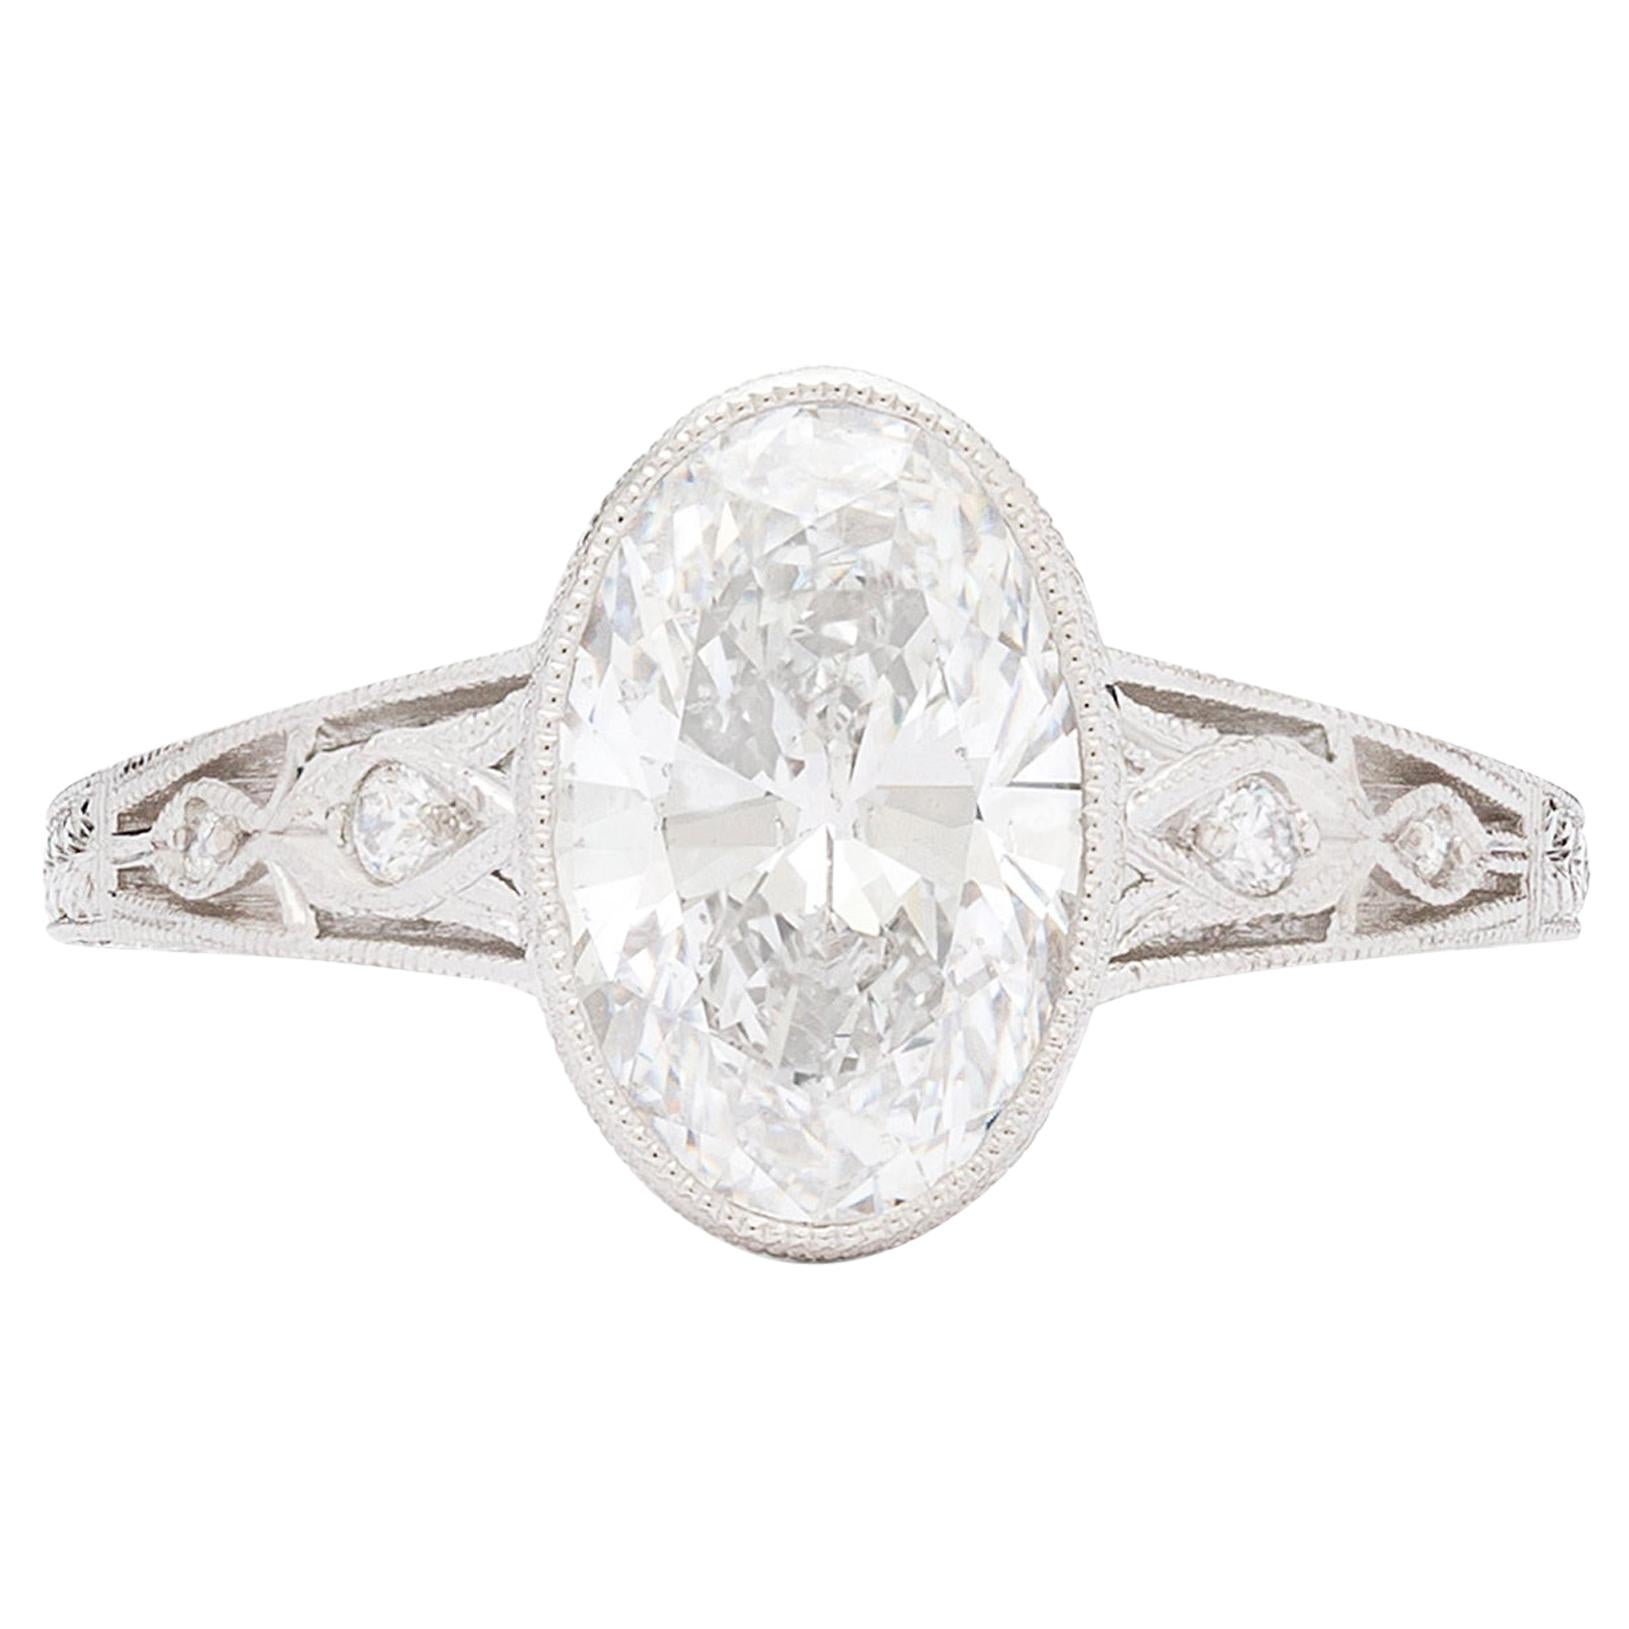 Oval Cut Diamond Art Deco Style Engagement Ring